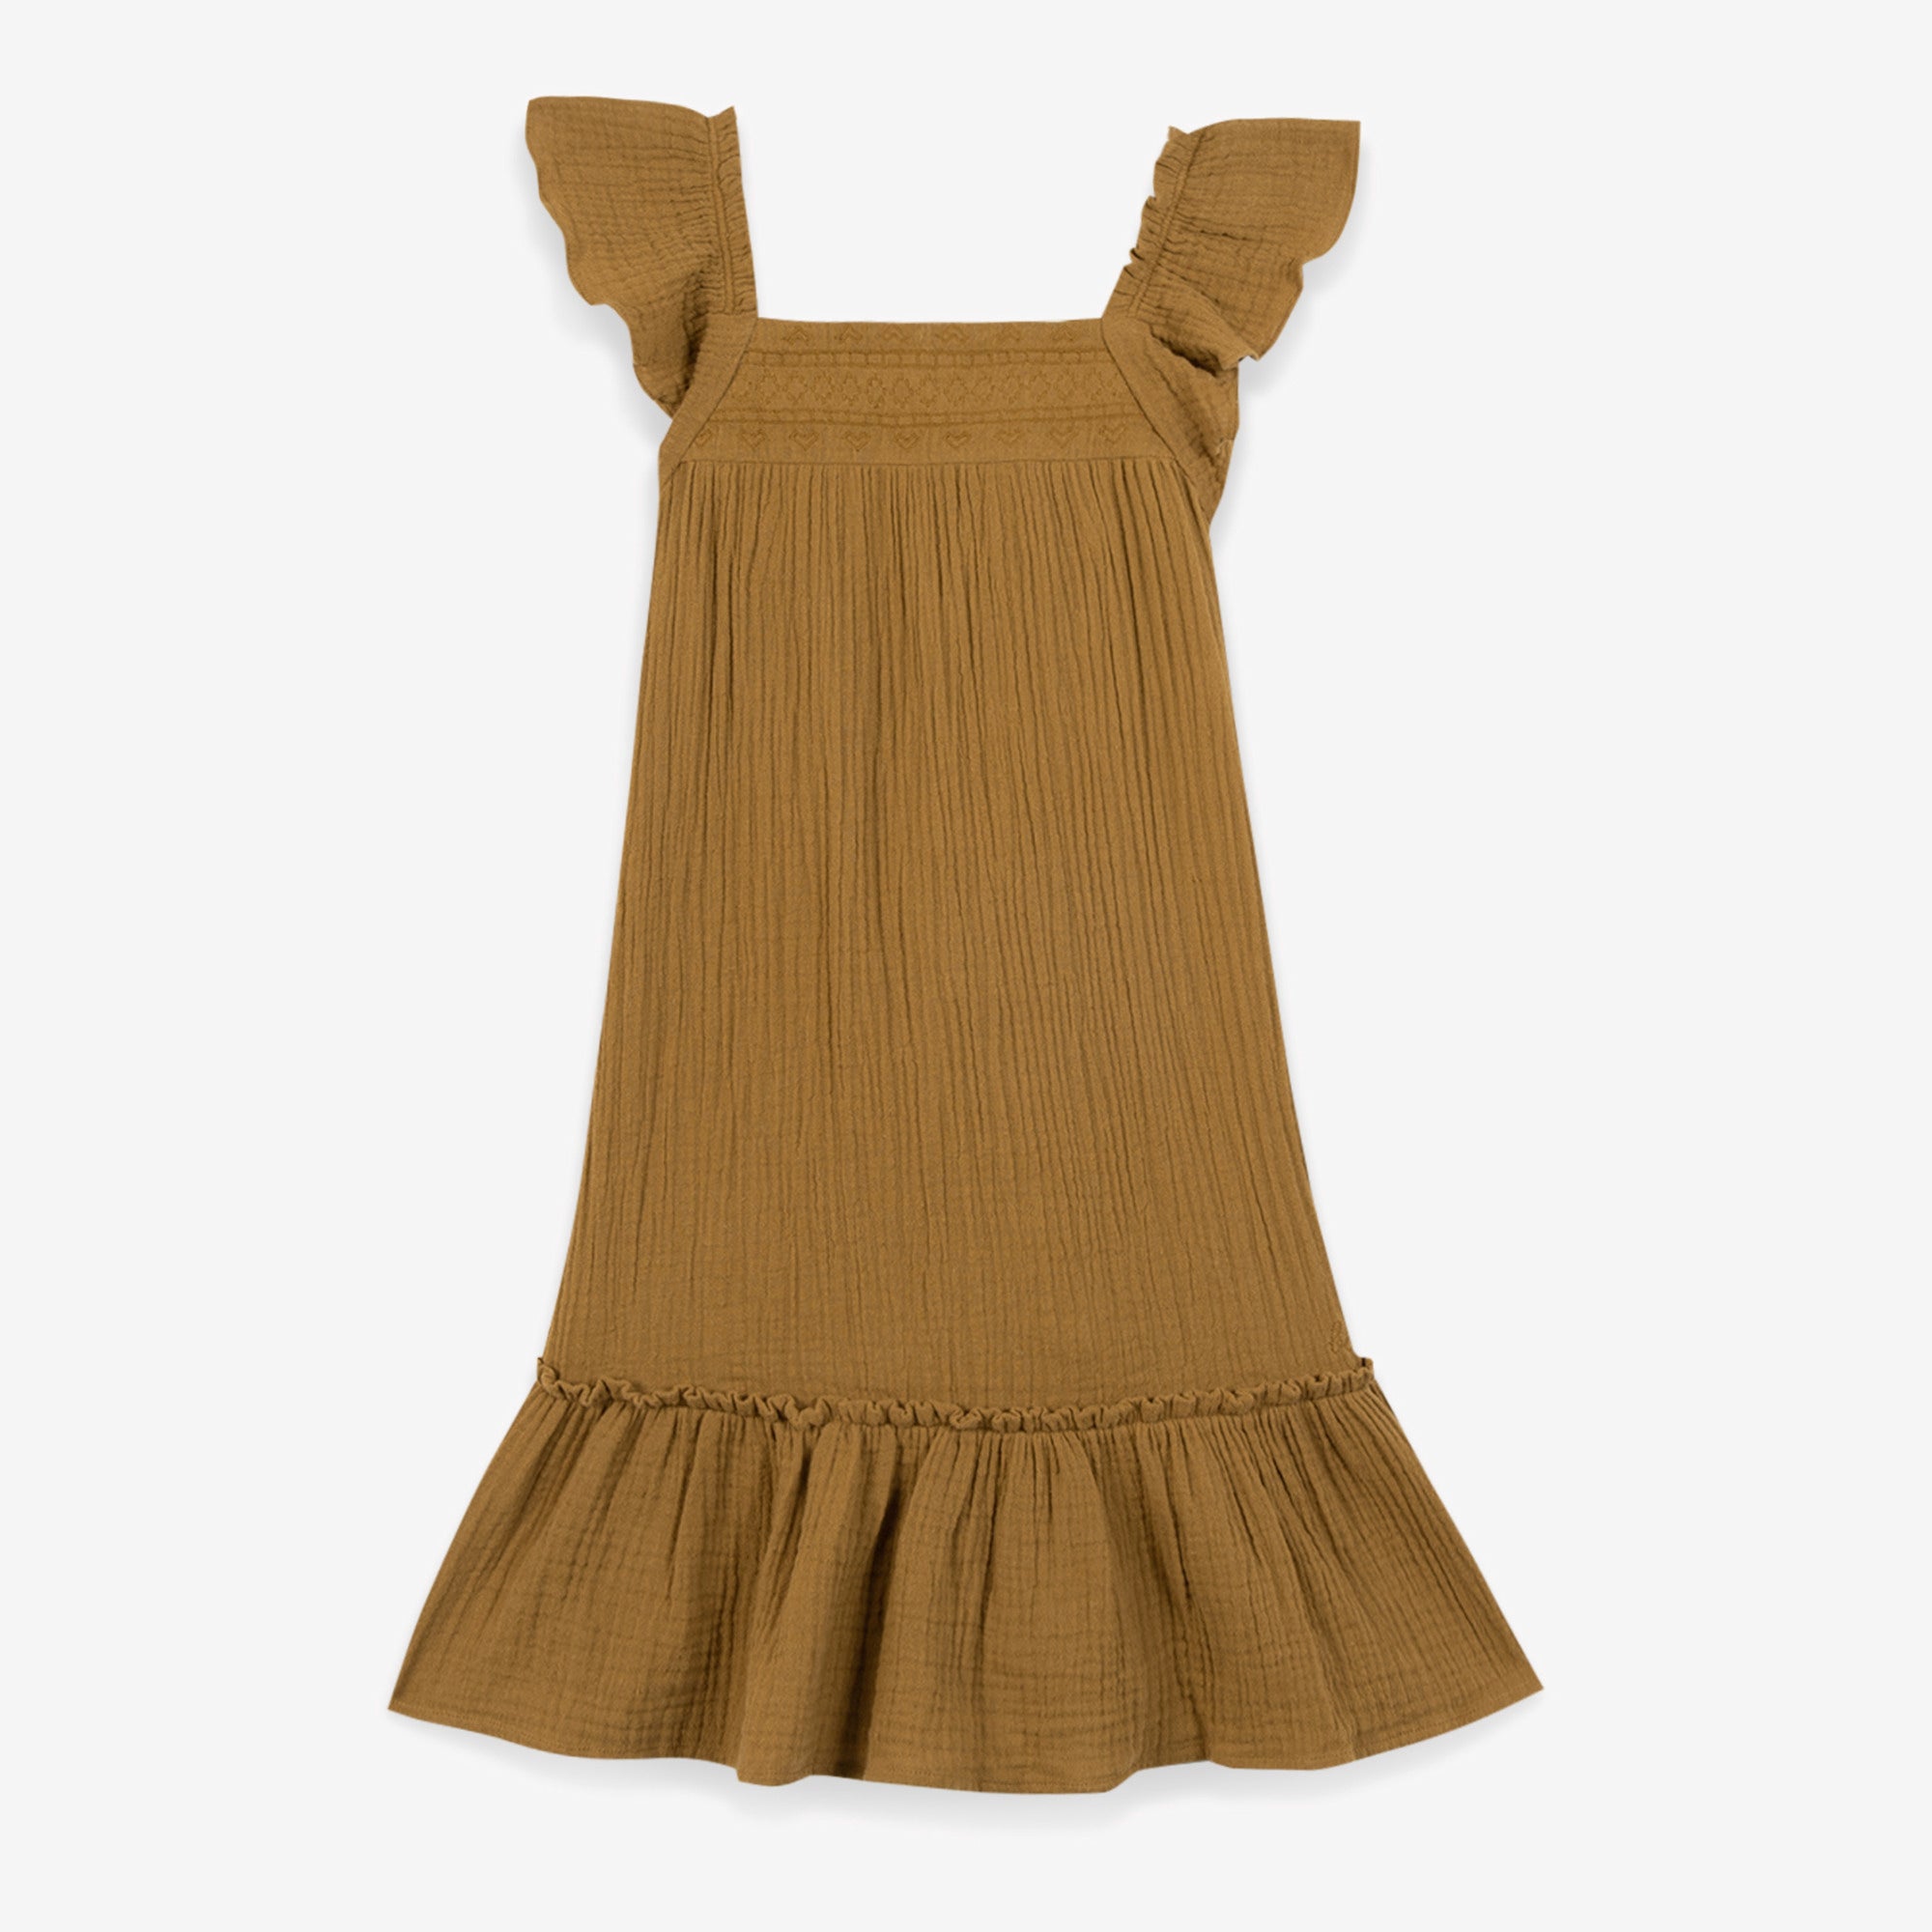 Girls Brown Cotton Dress